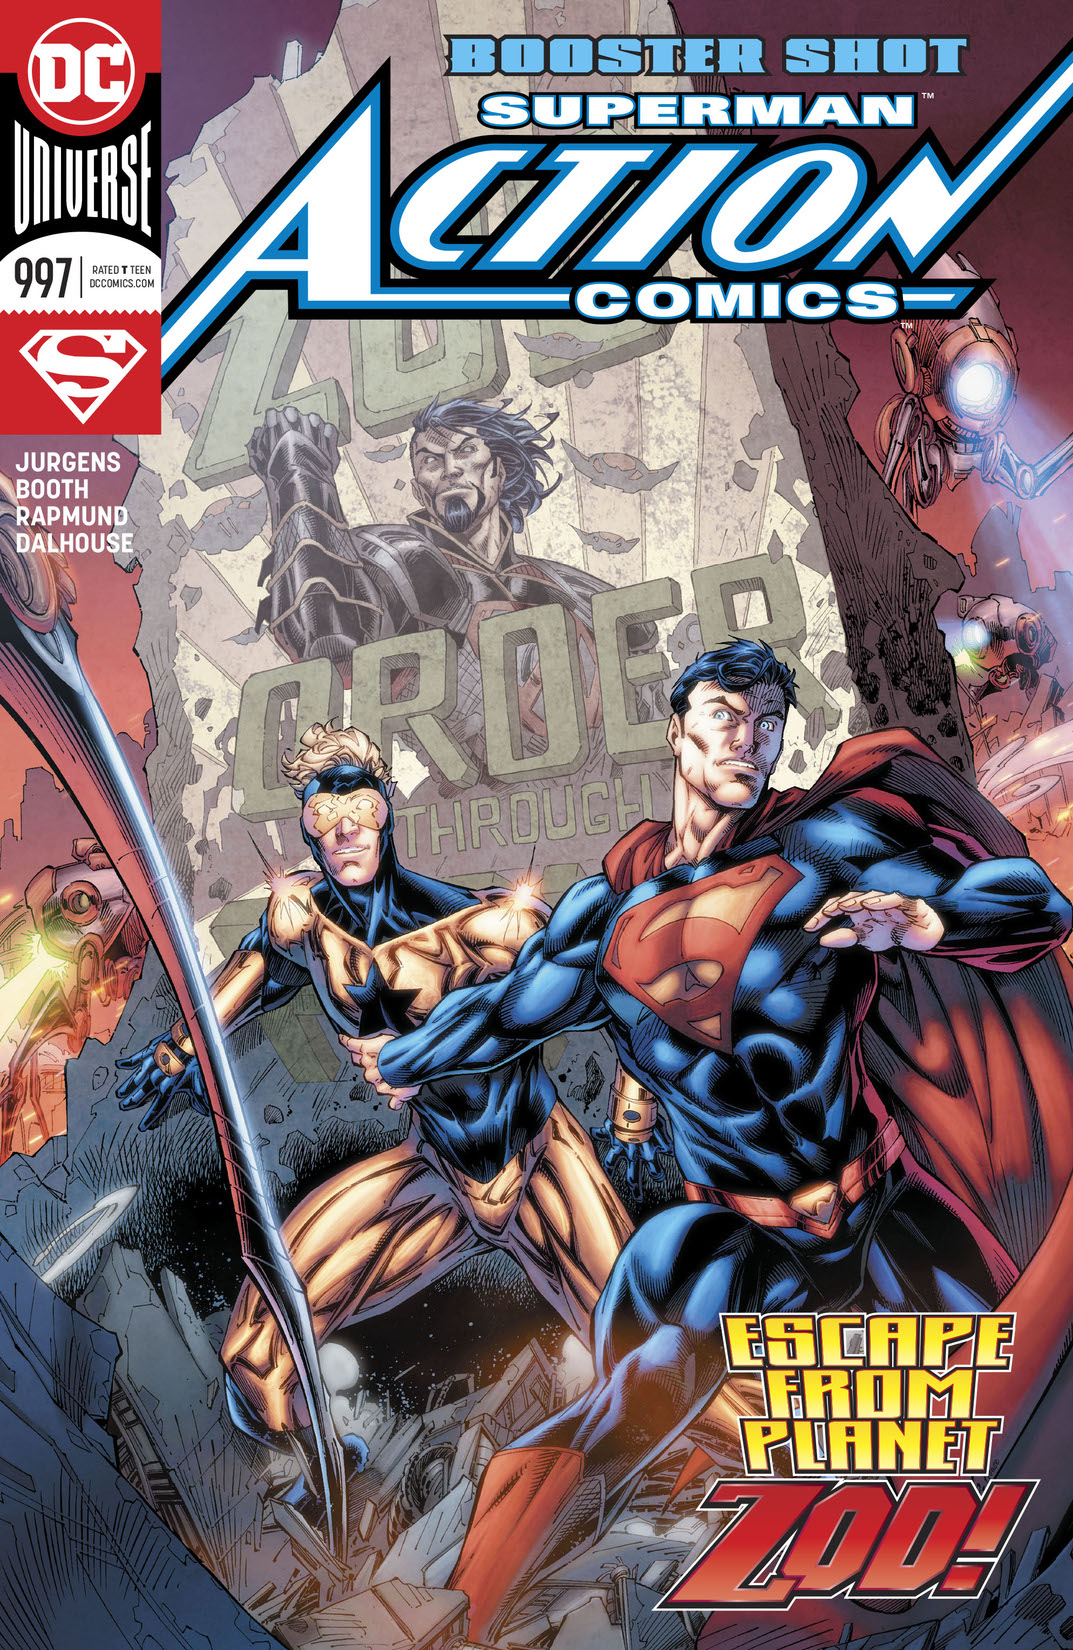 Action Comics (2016-) #997 preview images